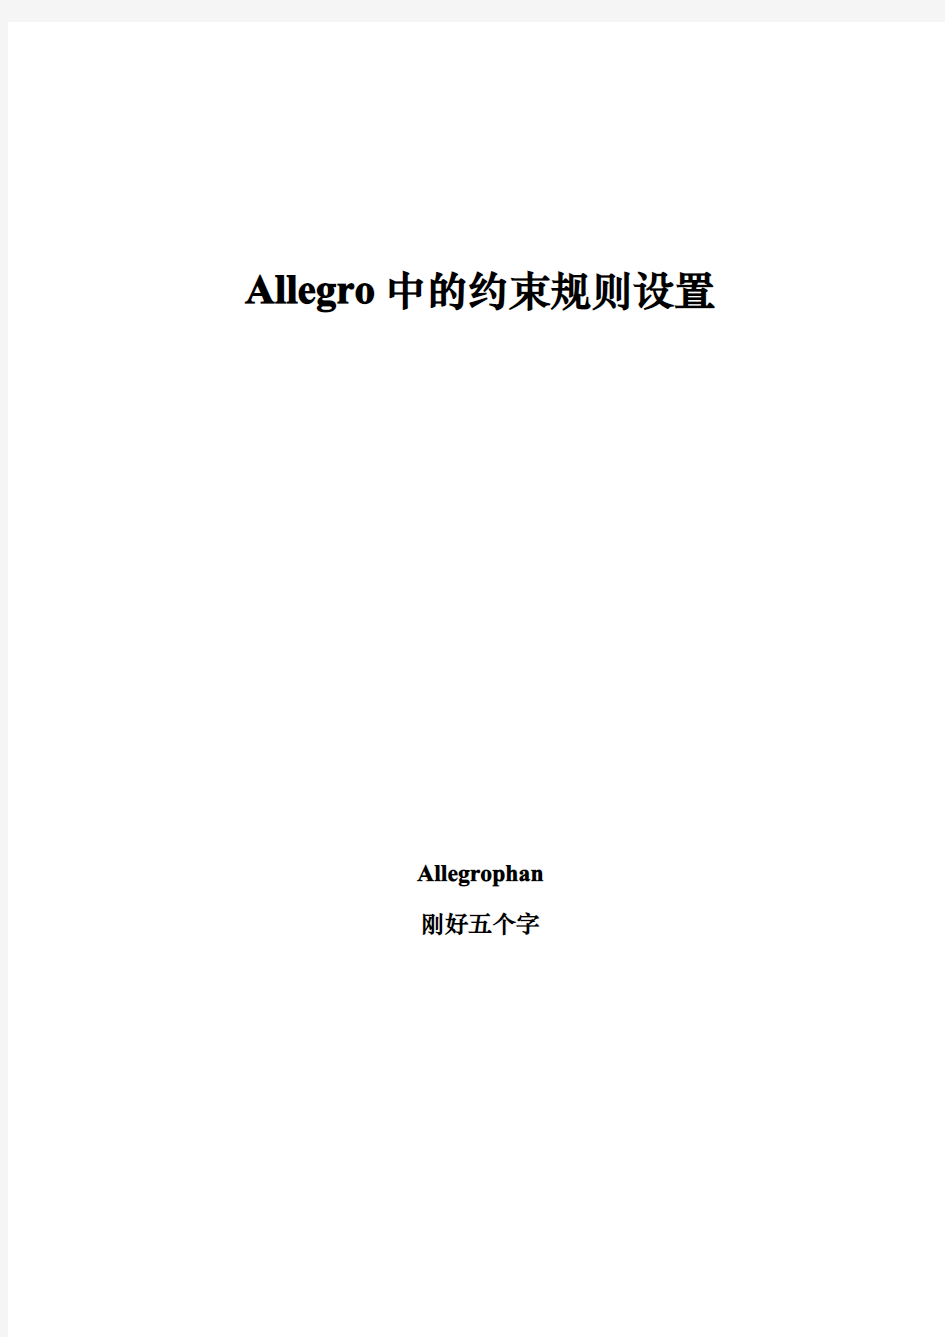 Allegro中的约束规则设置1.2